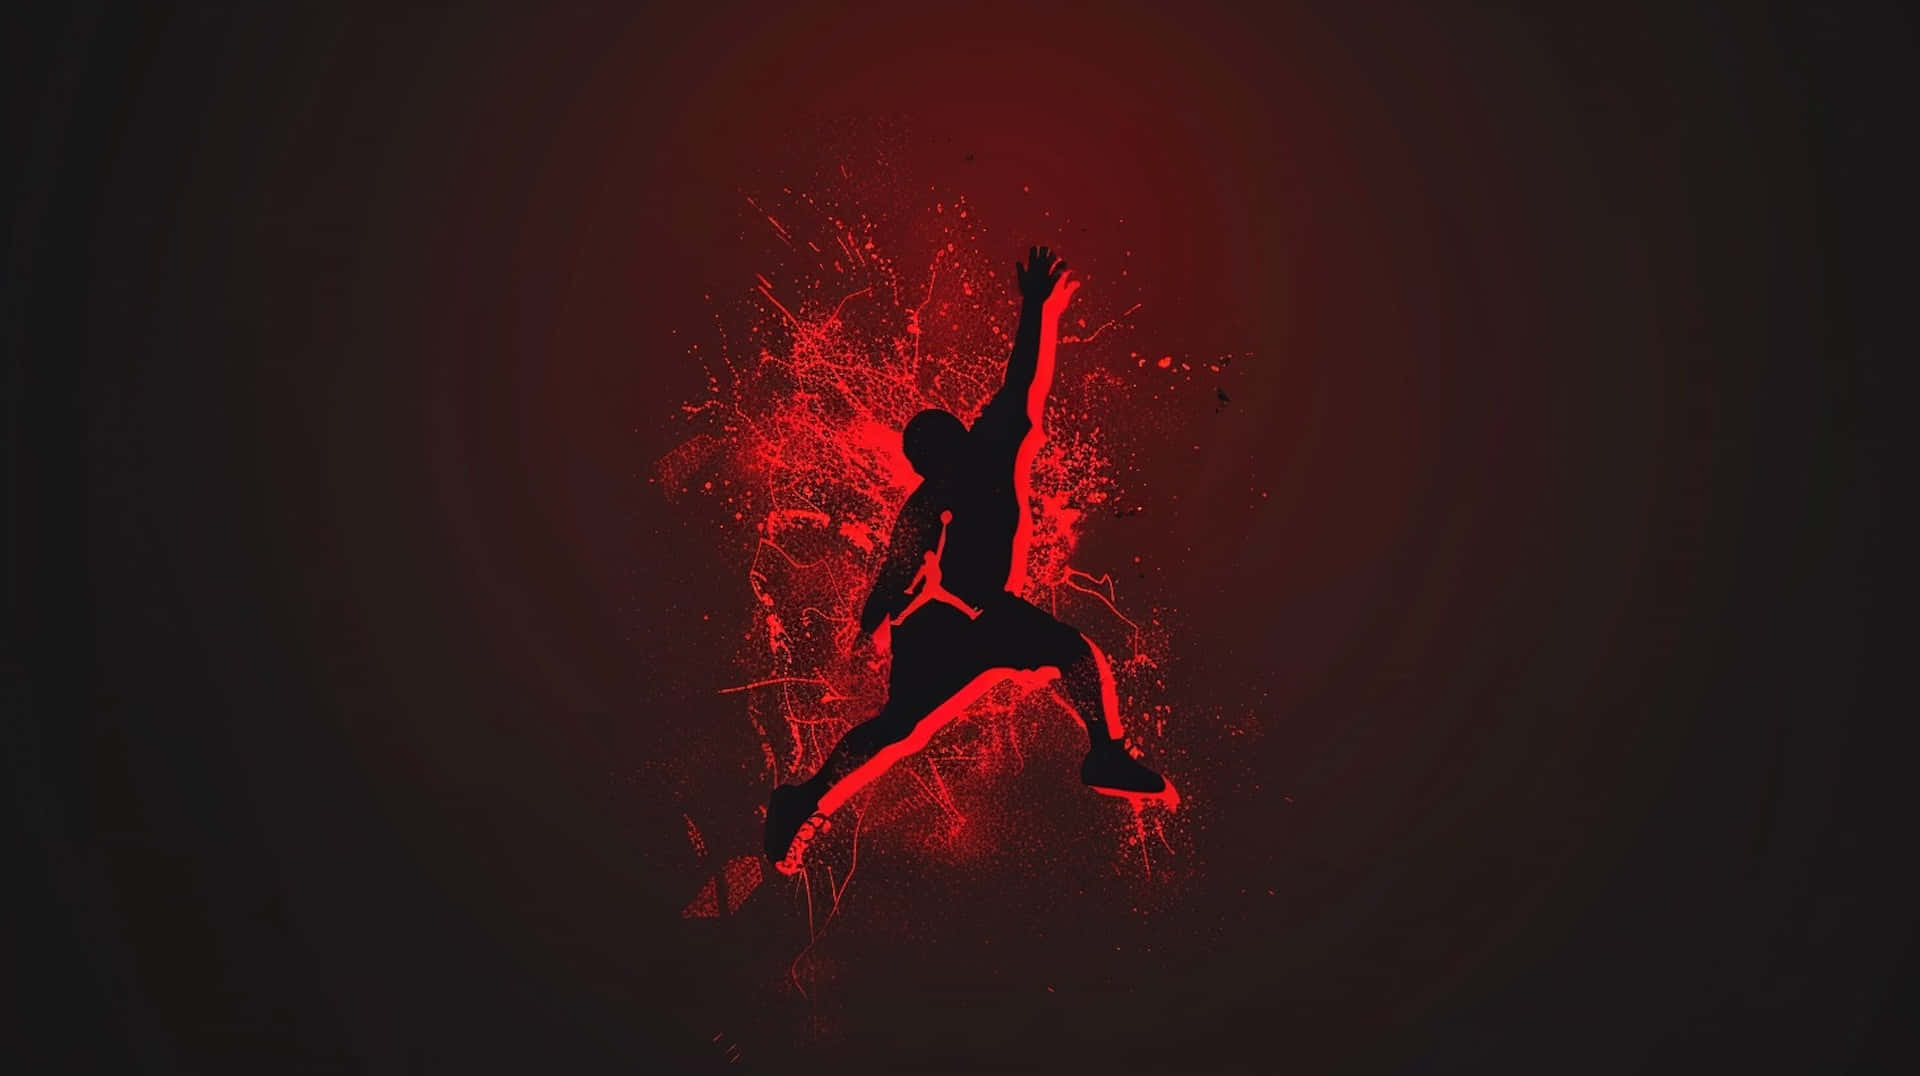 Red Jumpman Silhouette Artwork Wallpaper